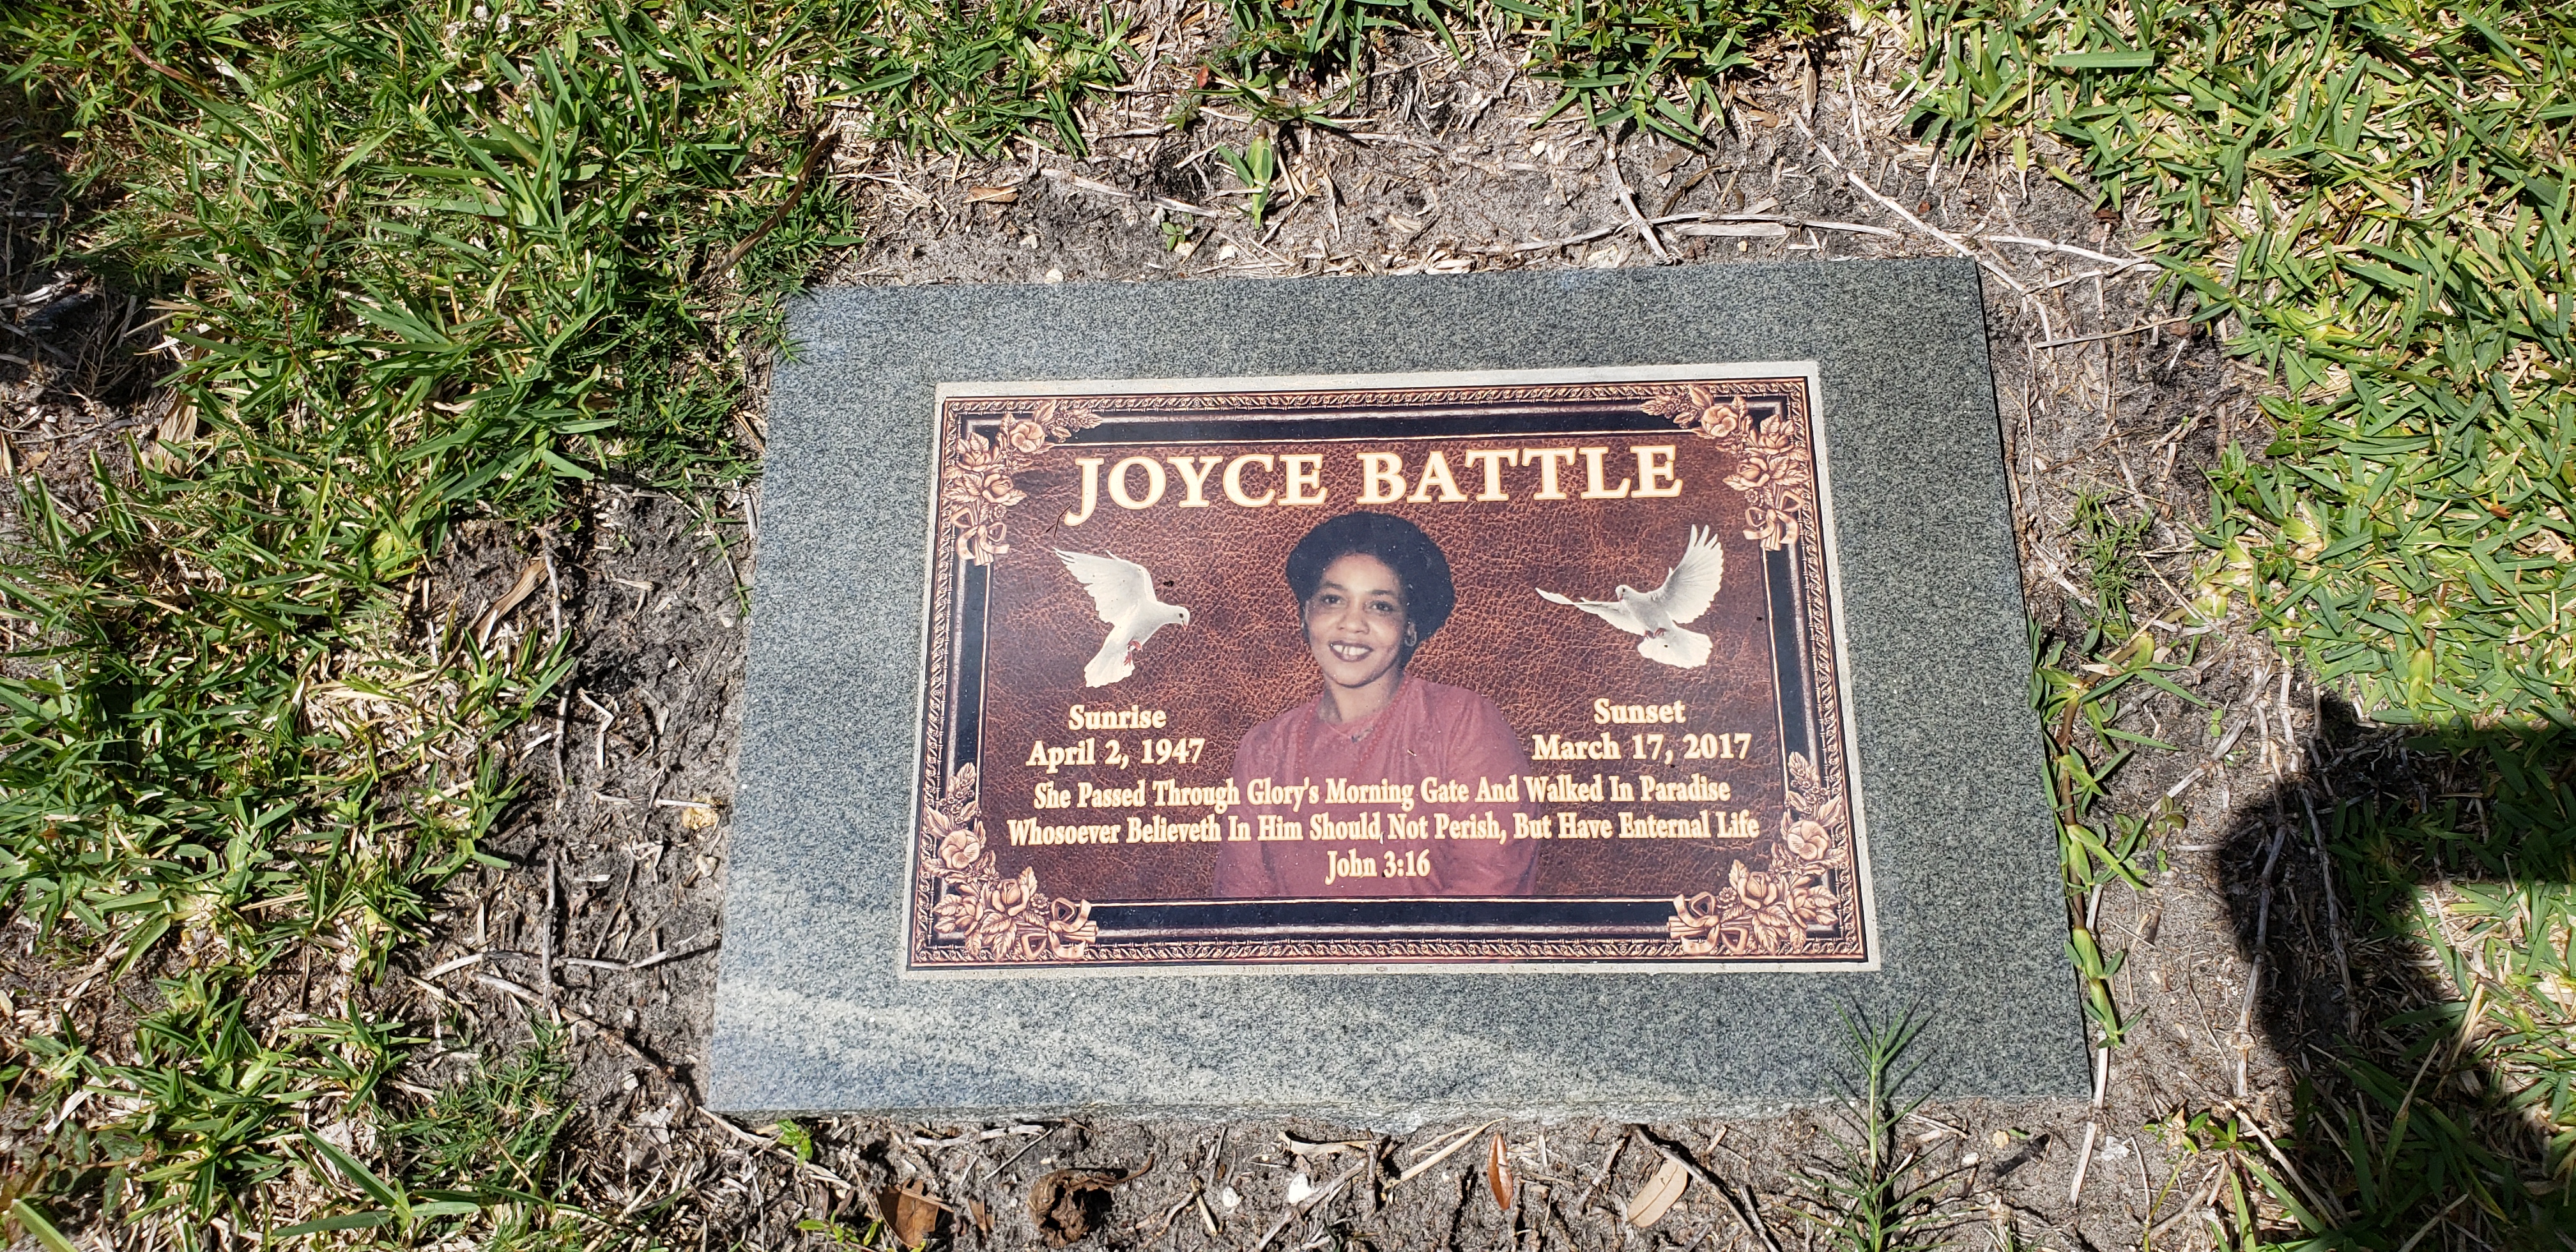 Joyce Battle